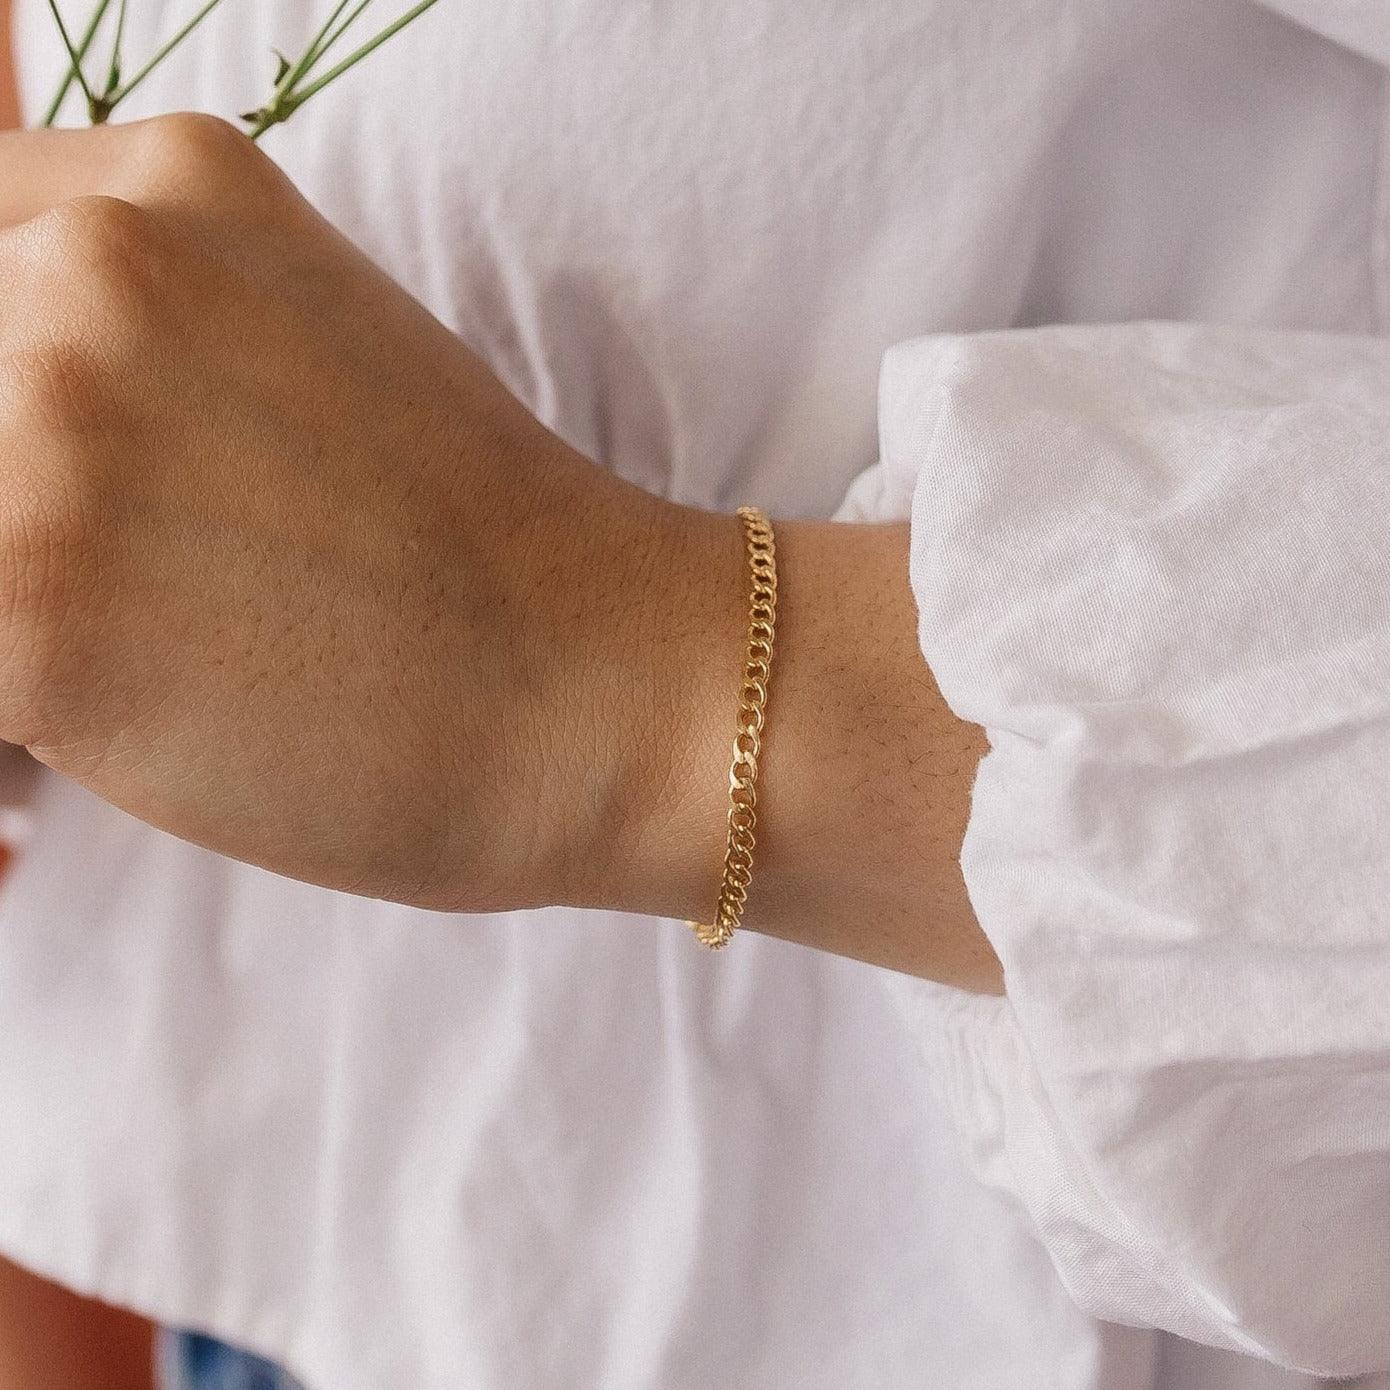 Wyatt Curb Chain Bracelet - Nolia Jewelry - Meaningful + Sustainably Handcrafted Jewelry